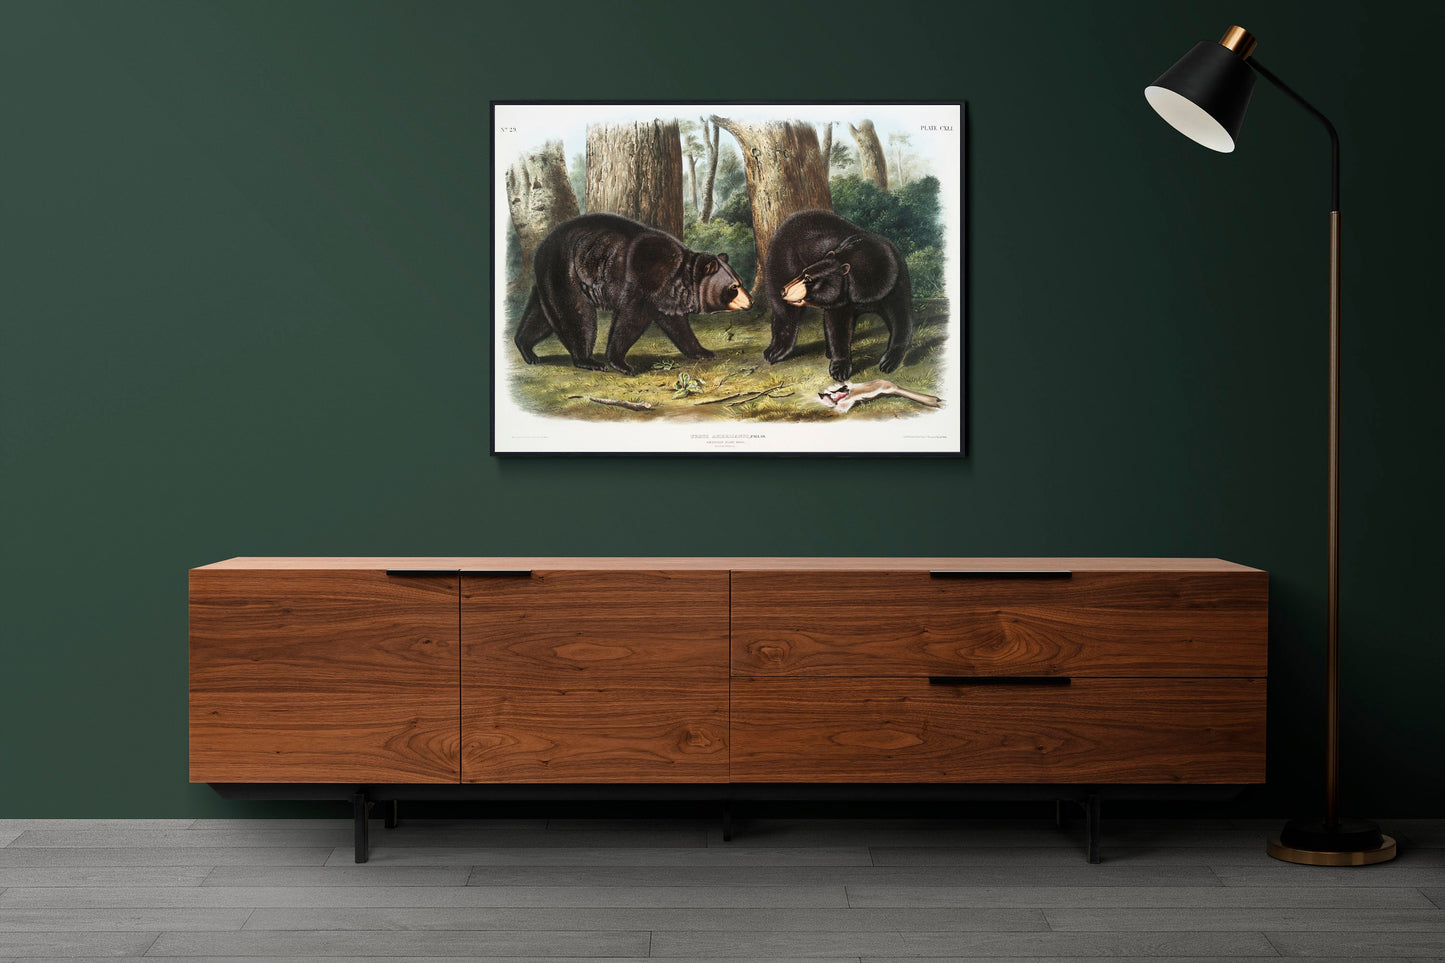 American Black Bear Illustration Poster Print Wall Hanging Decor A4 A3 A2